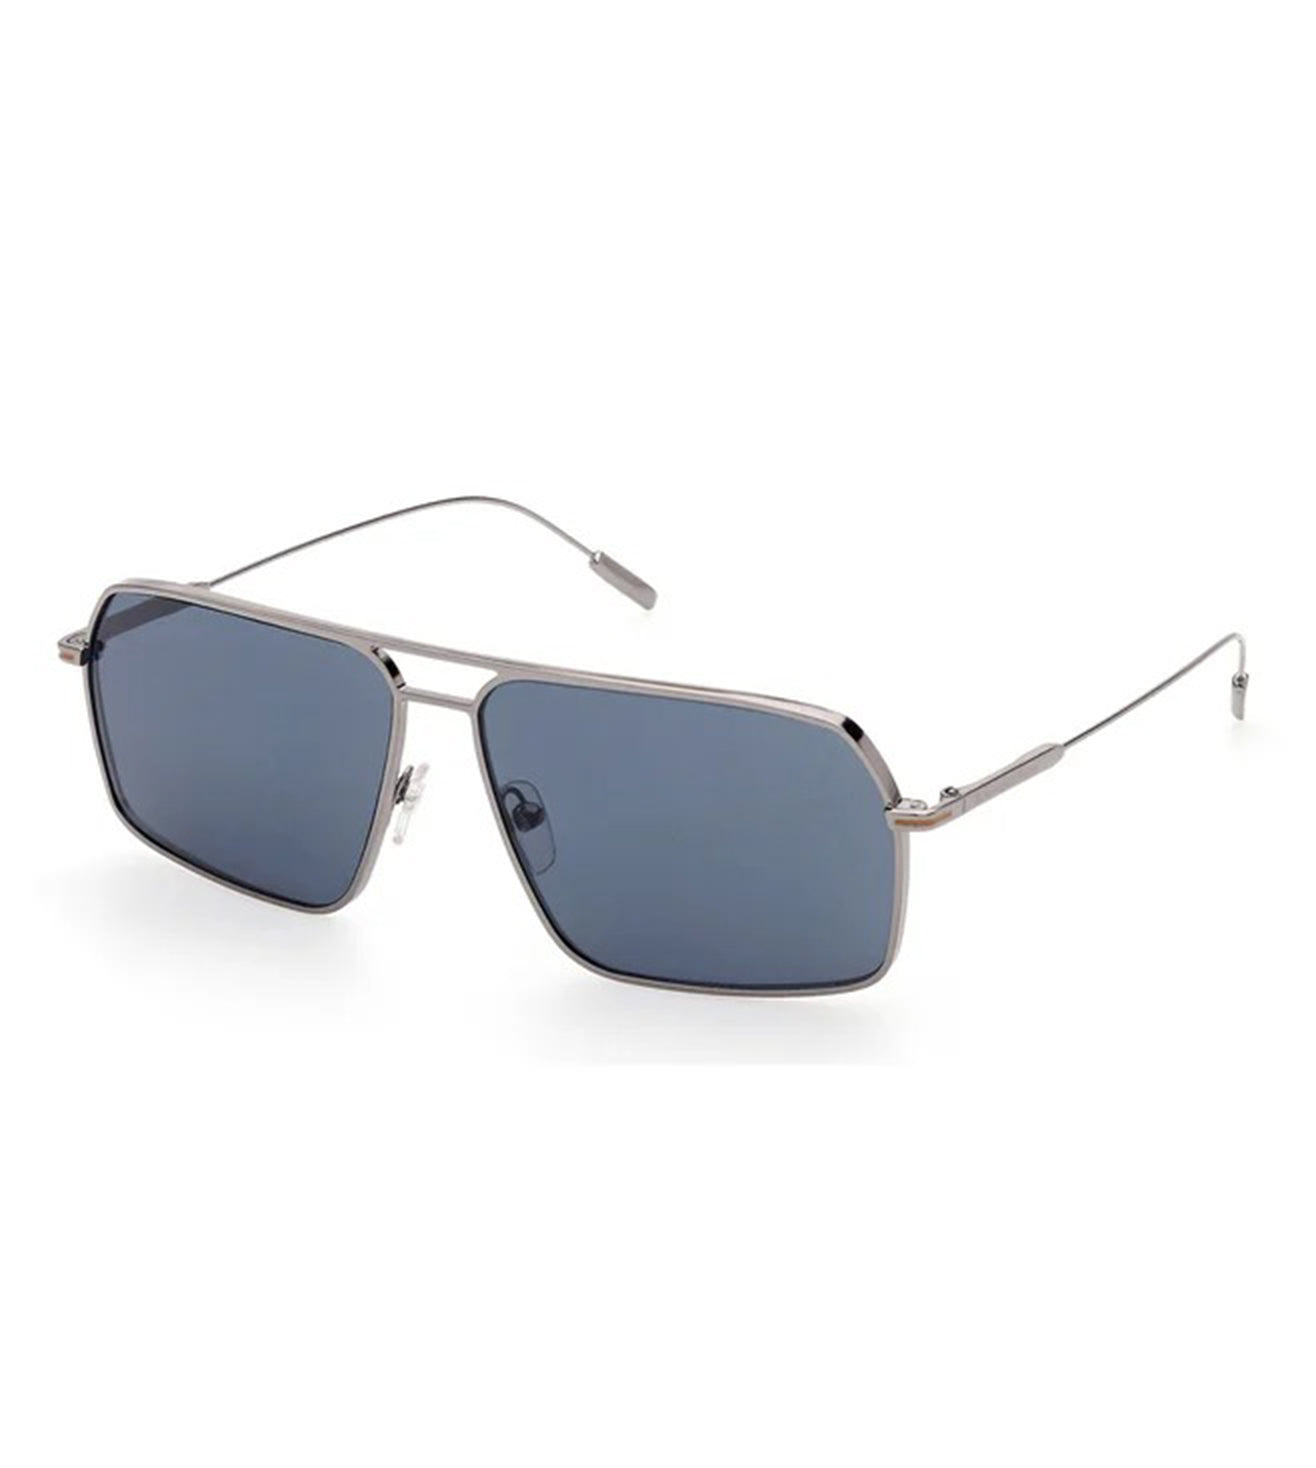 Zegna Men's Blue Aviator Sunglasses